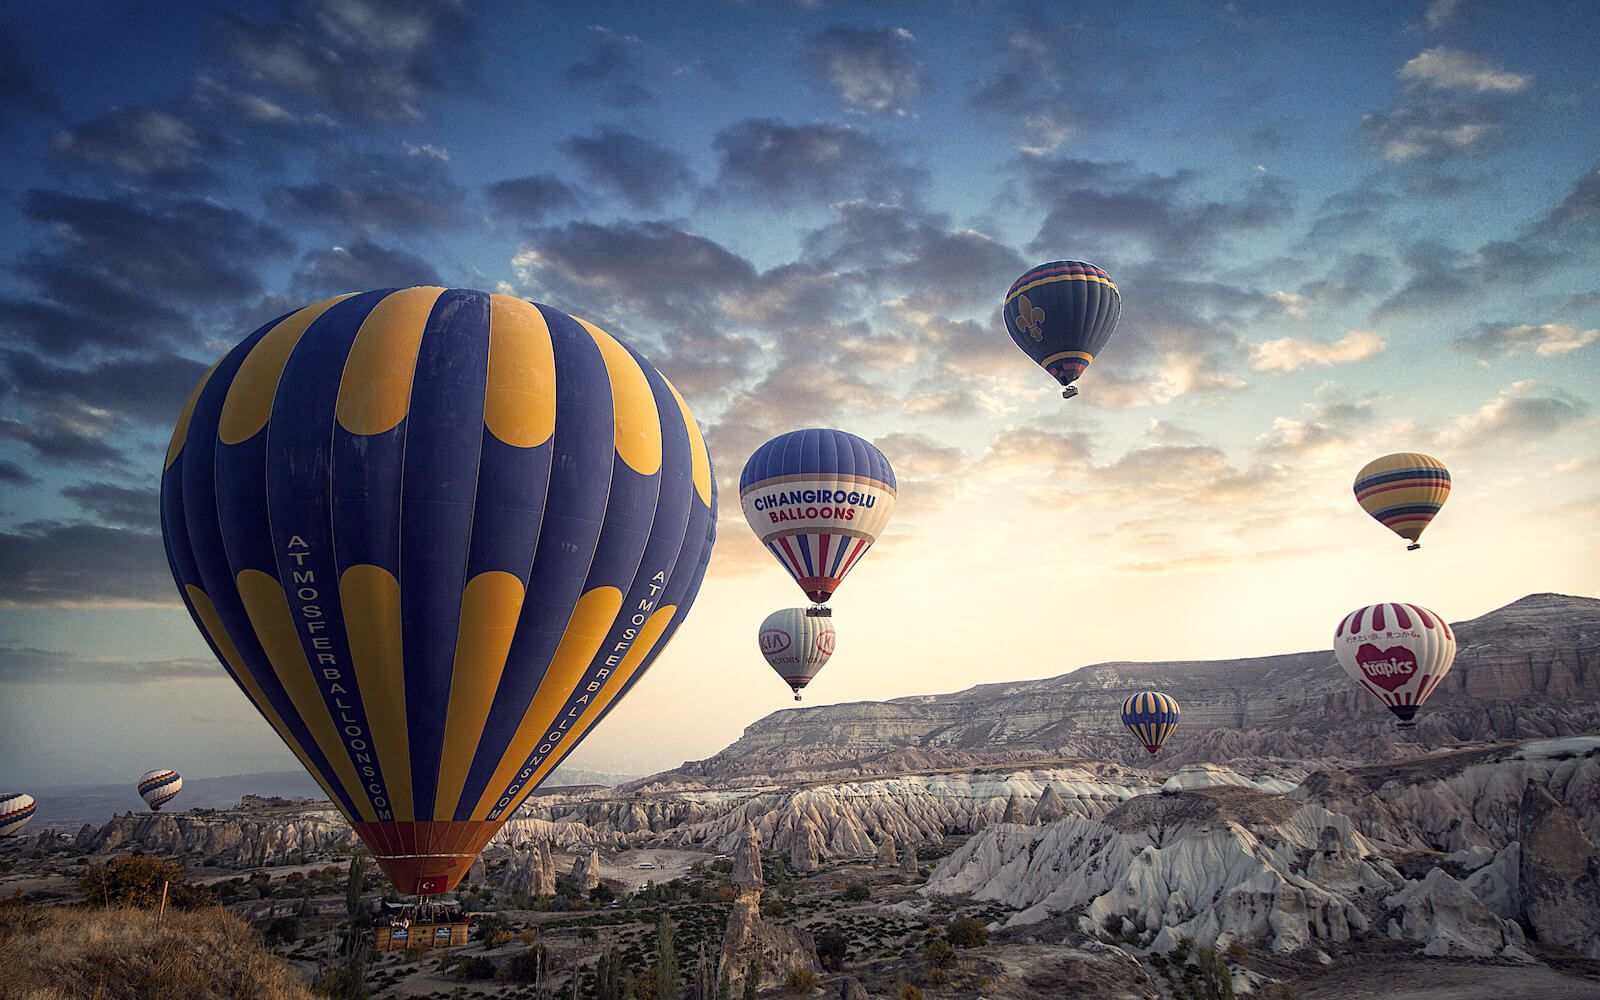 Elika Cave Suites, Cappadocia - Balloon Tour